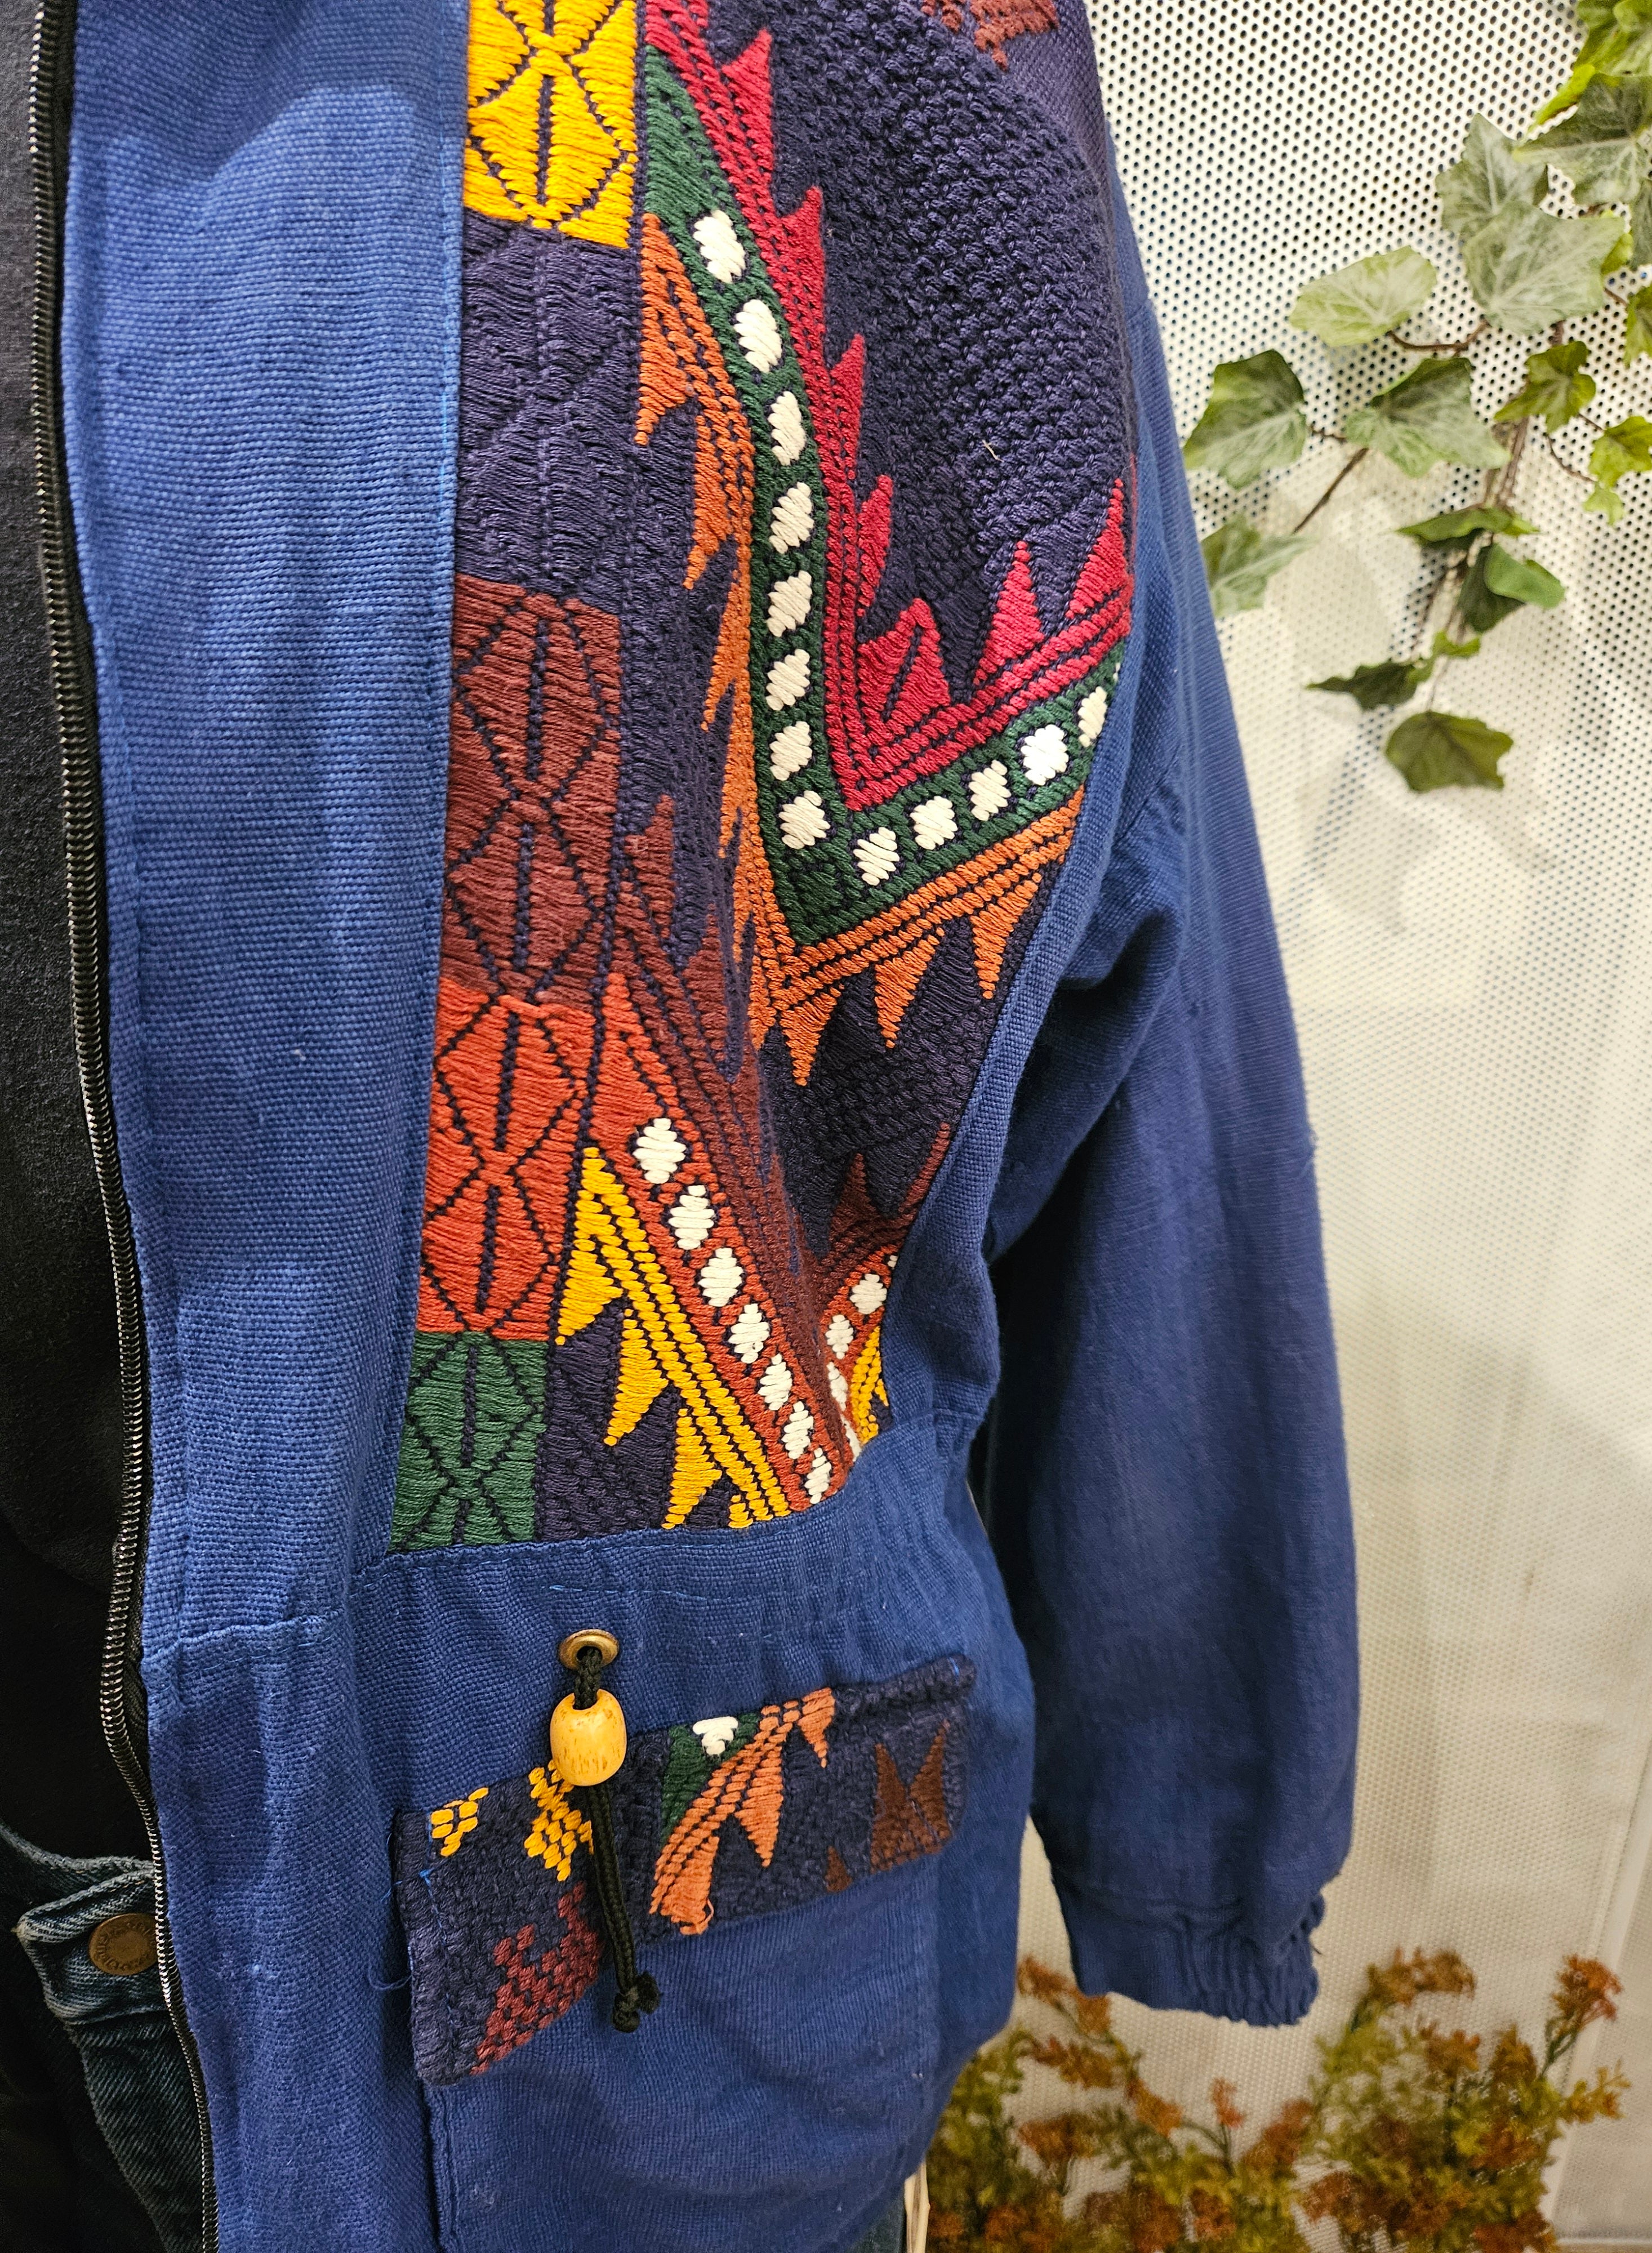 1990’s Tribal Patterned Jacket